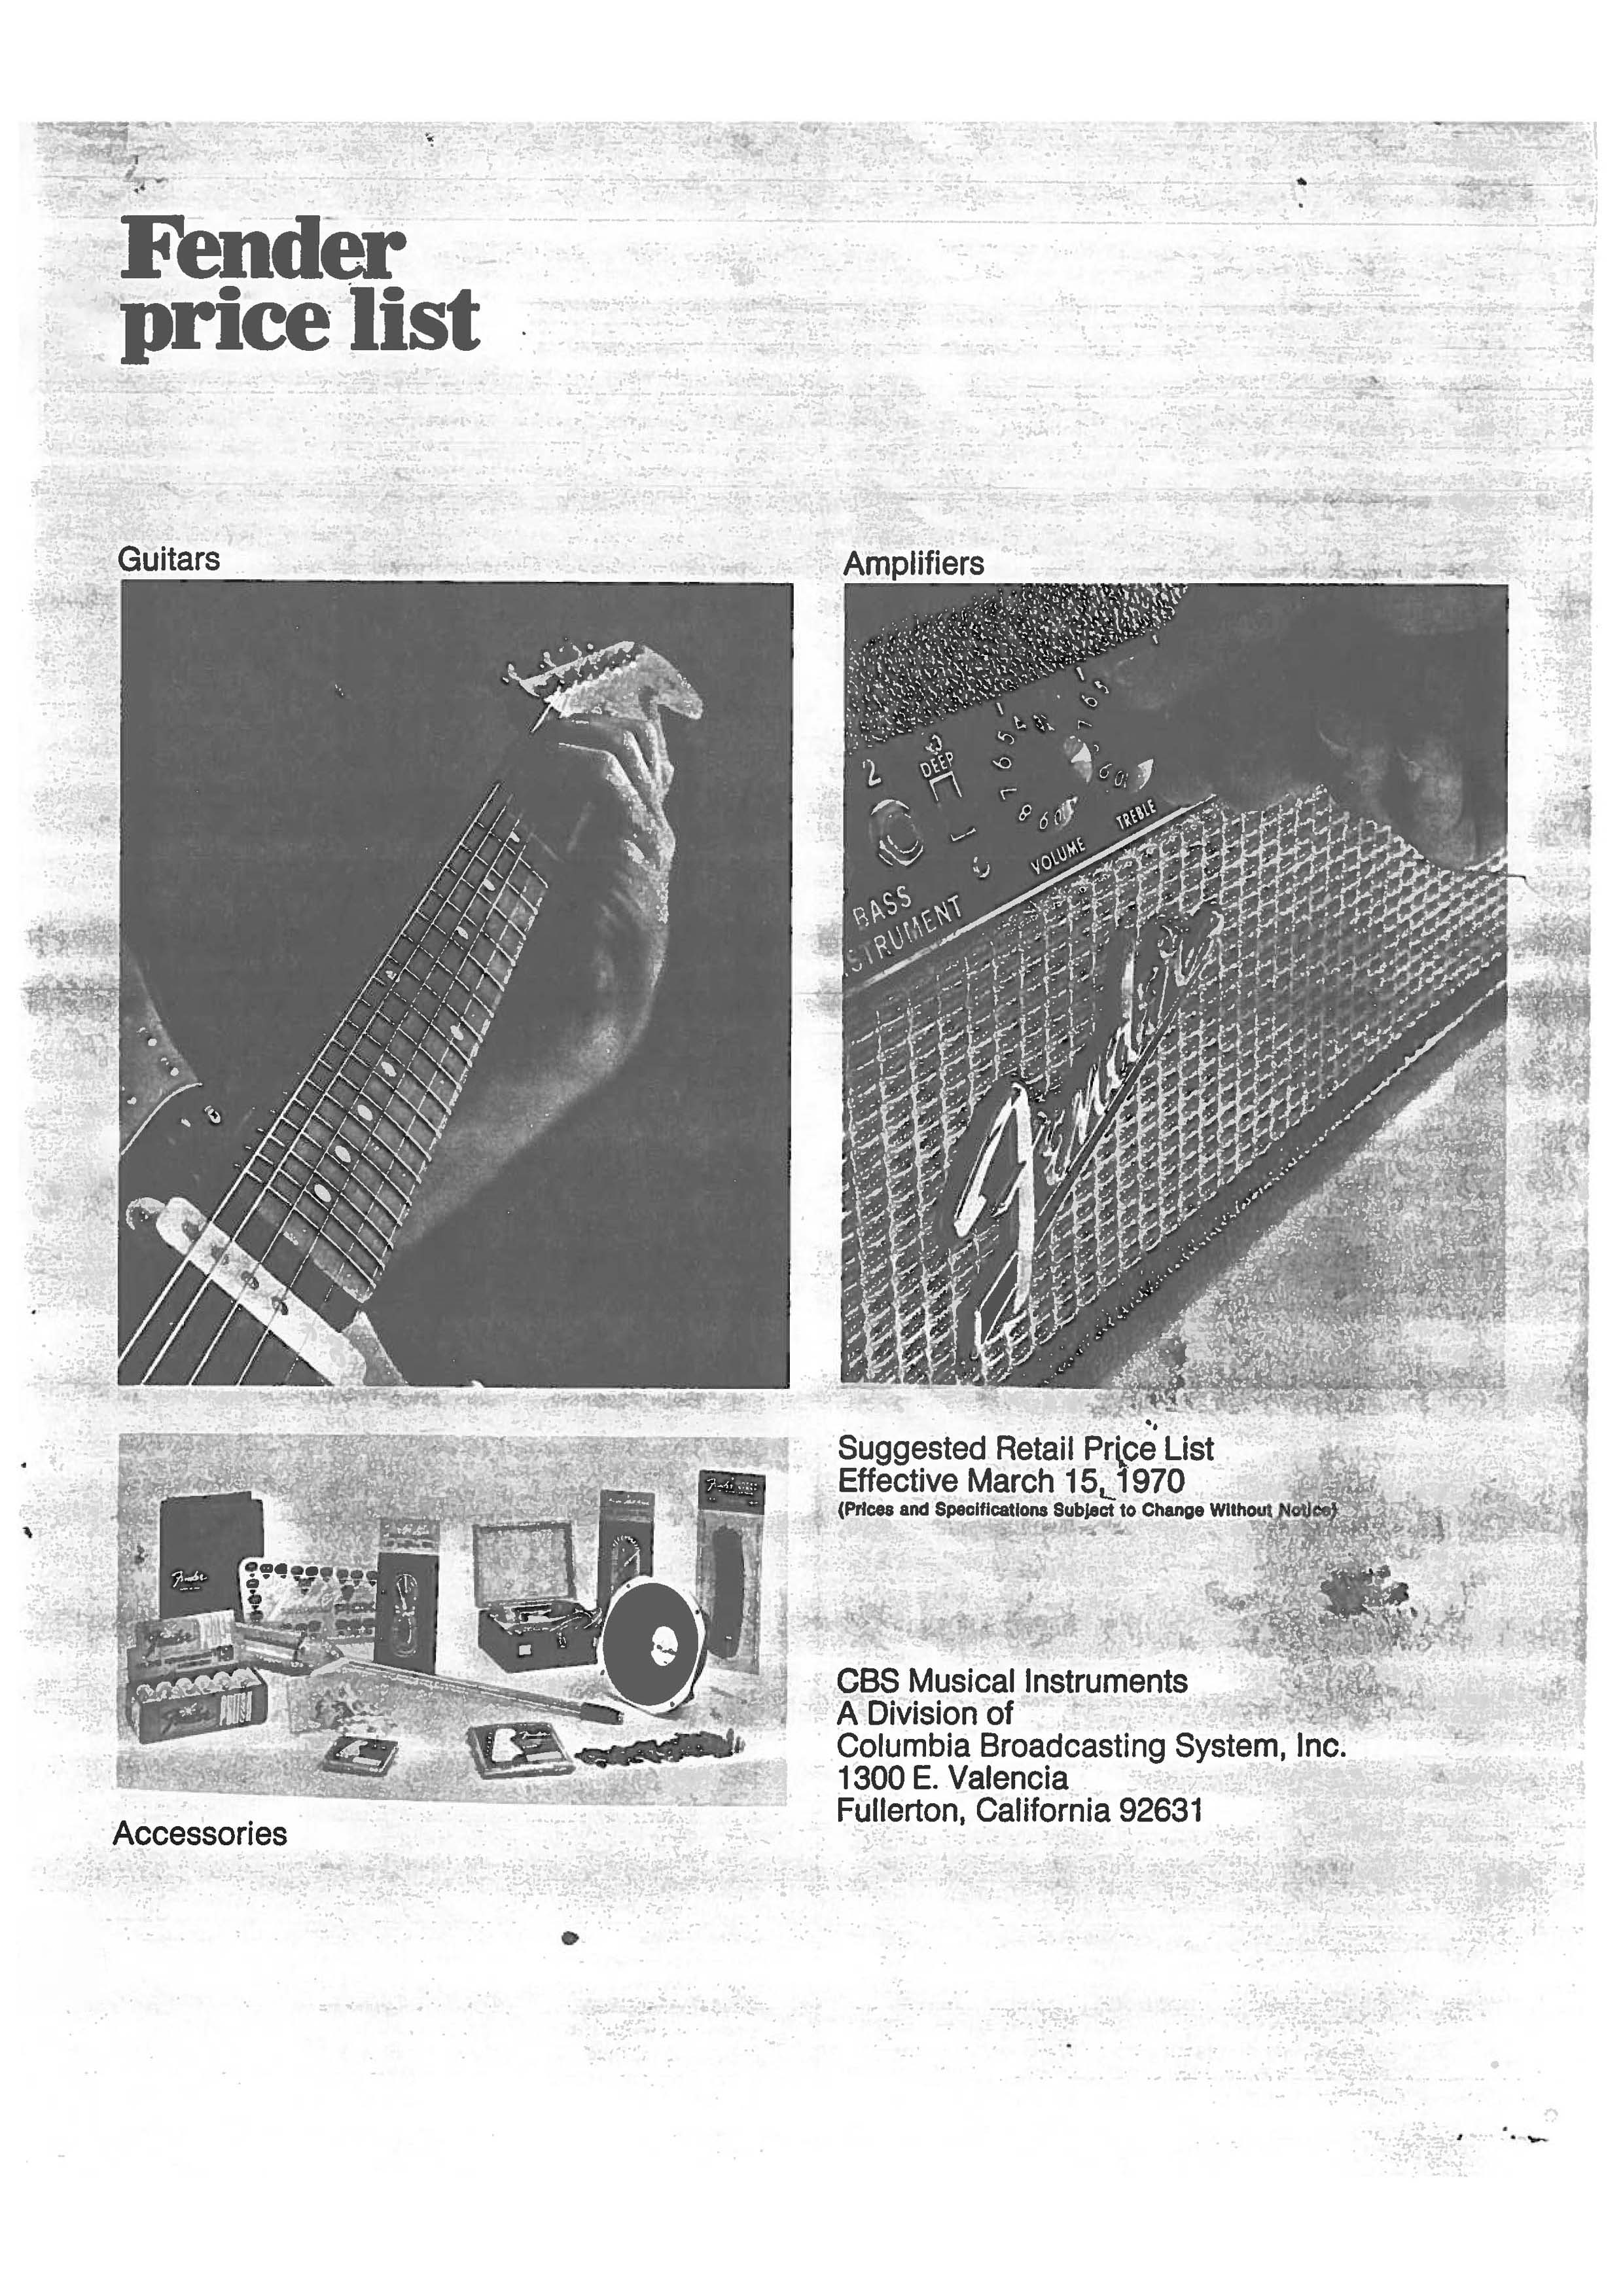 Fender Price list 1970